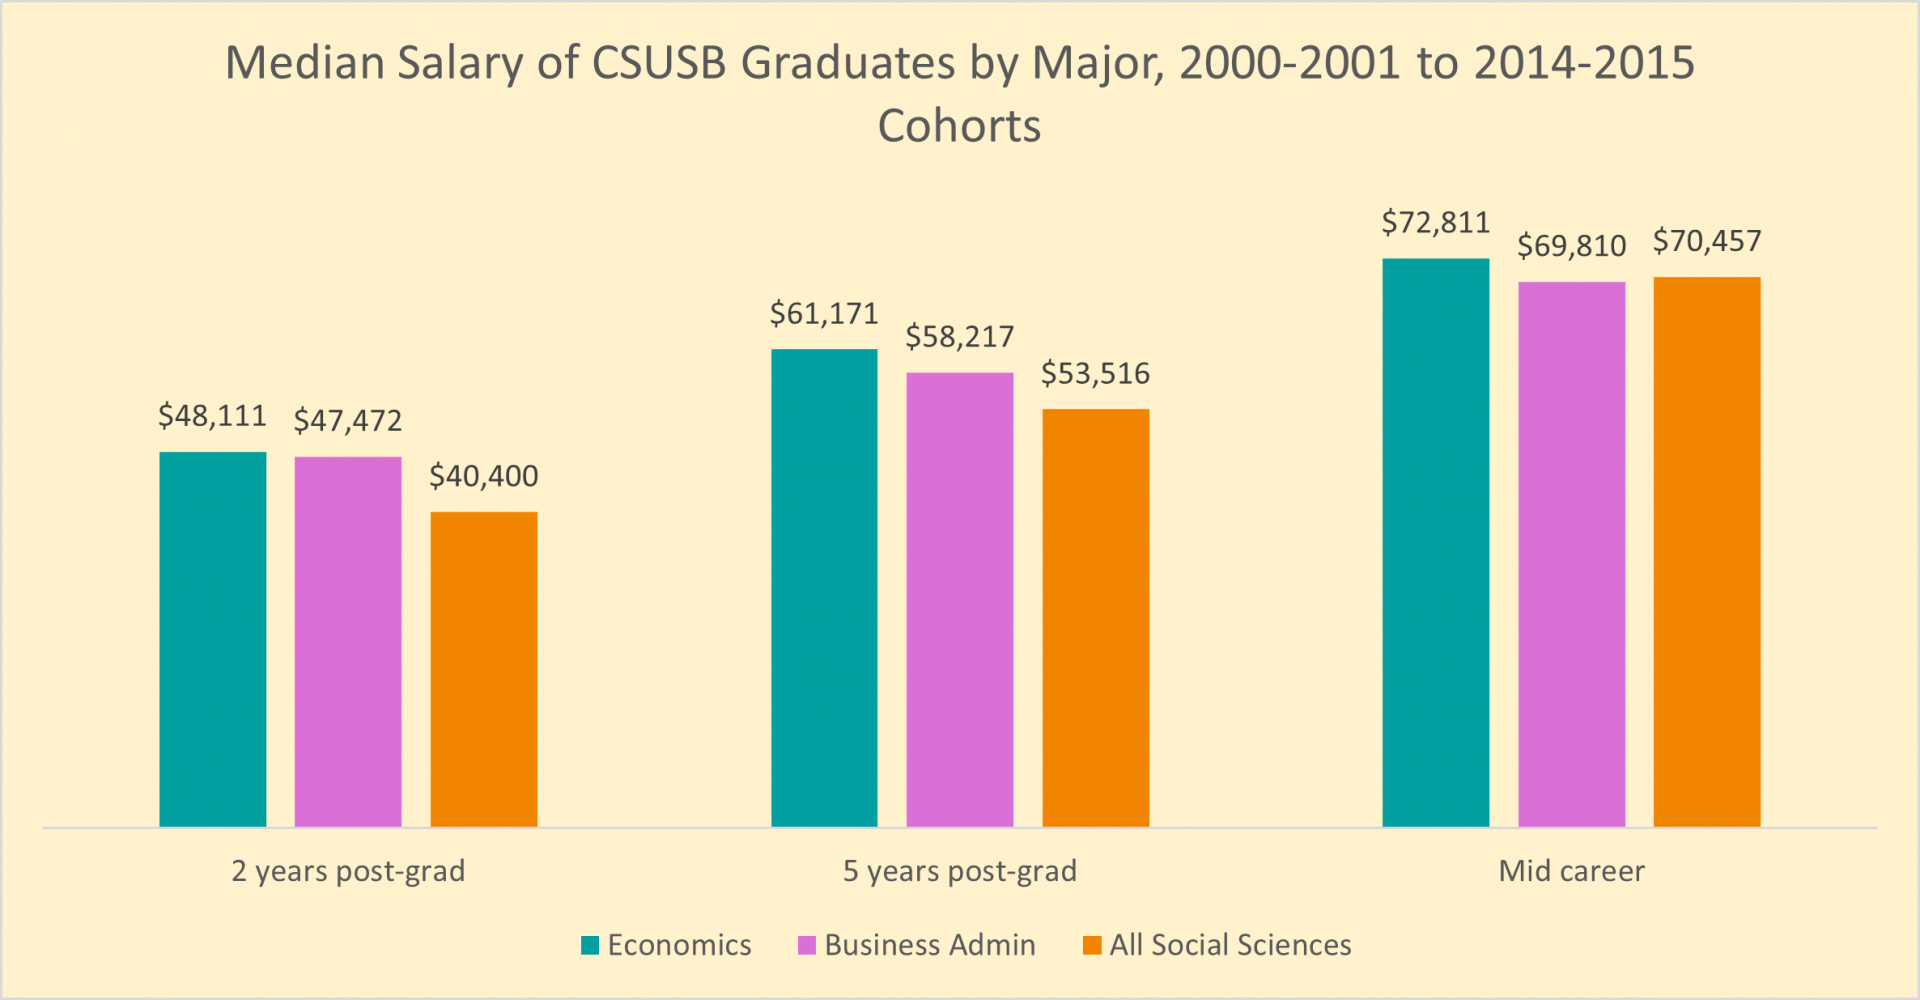 Median salary information by major, CSUSB graduates, 2001-2015 cohorts